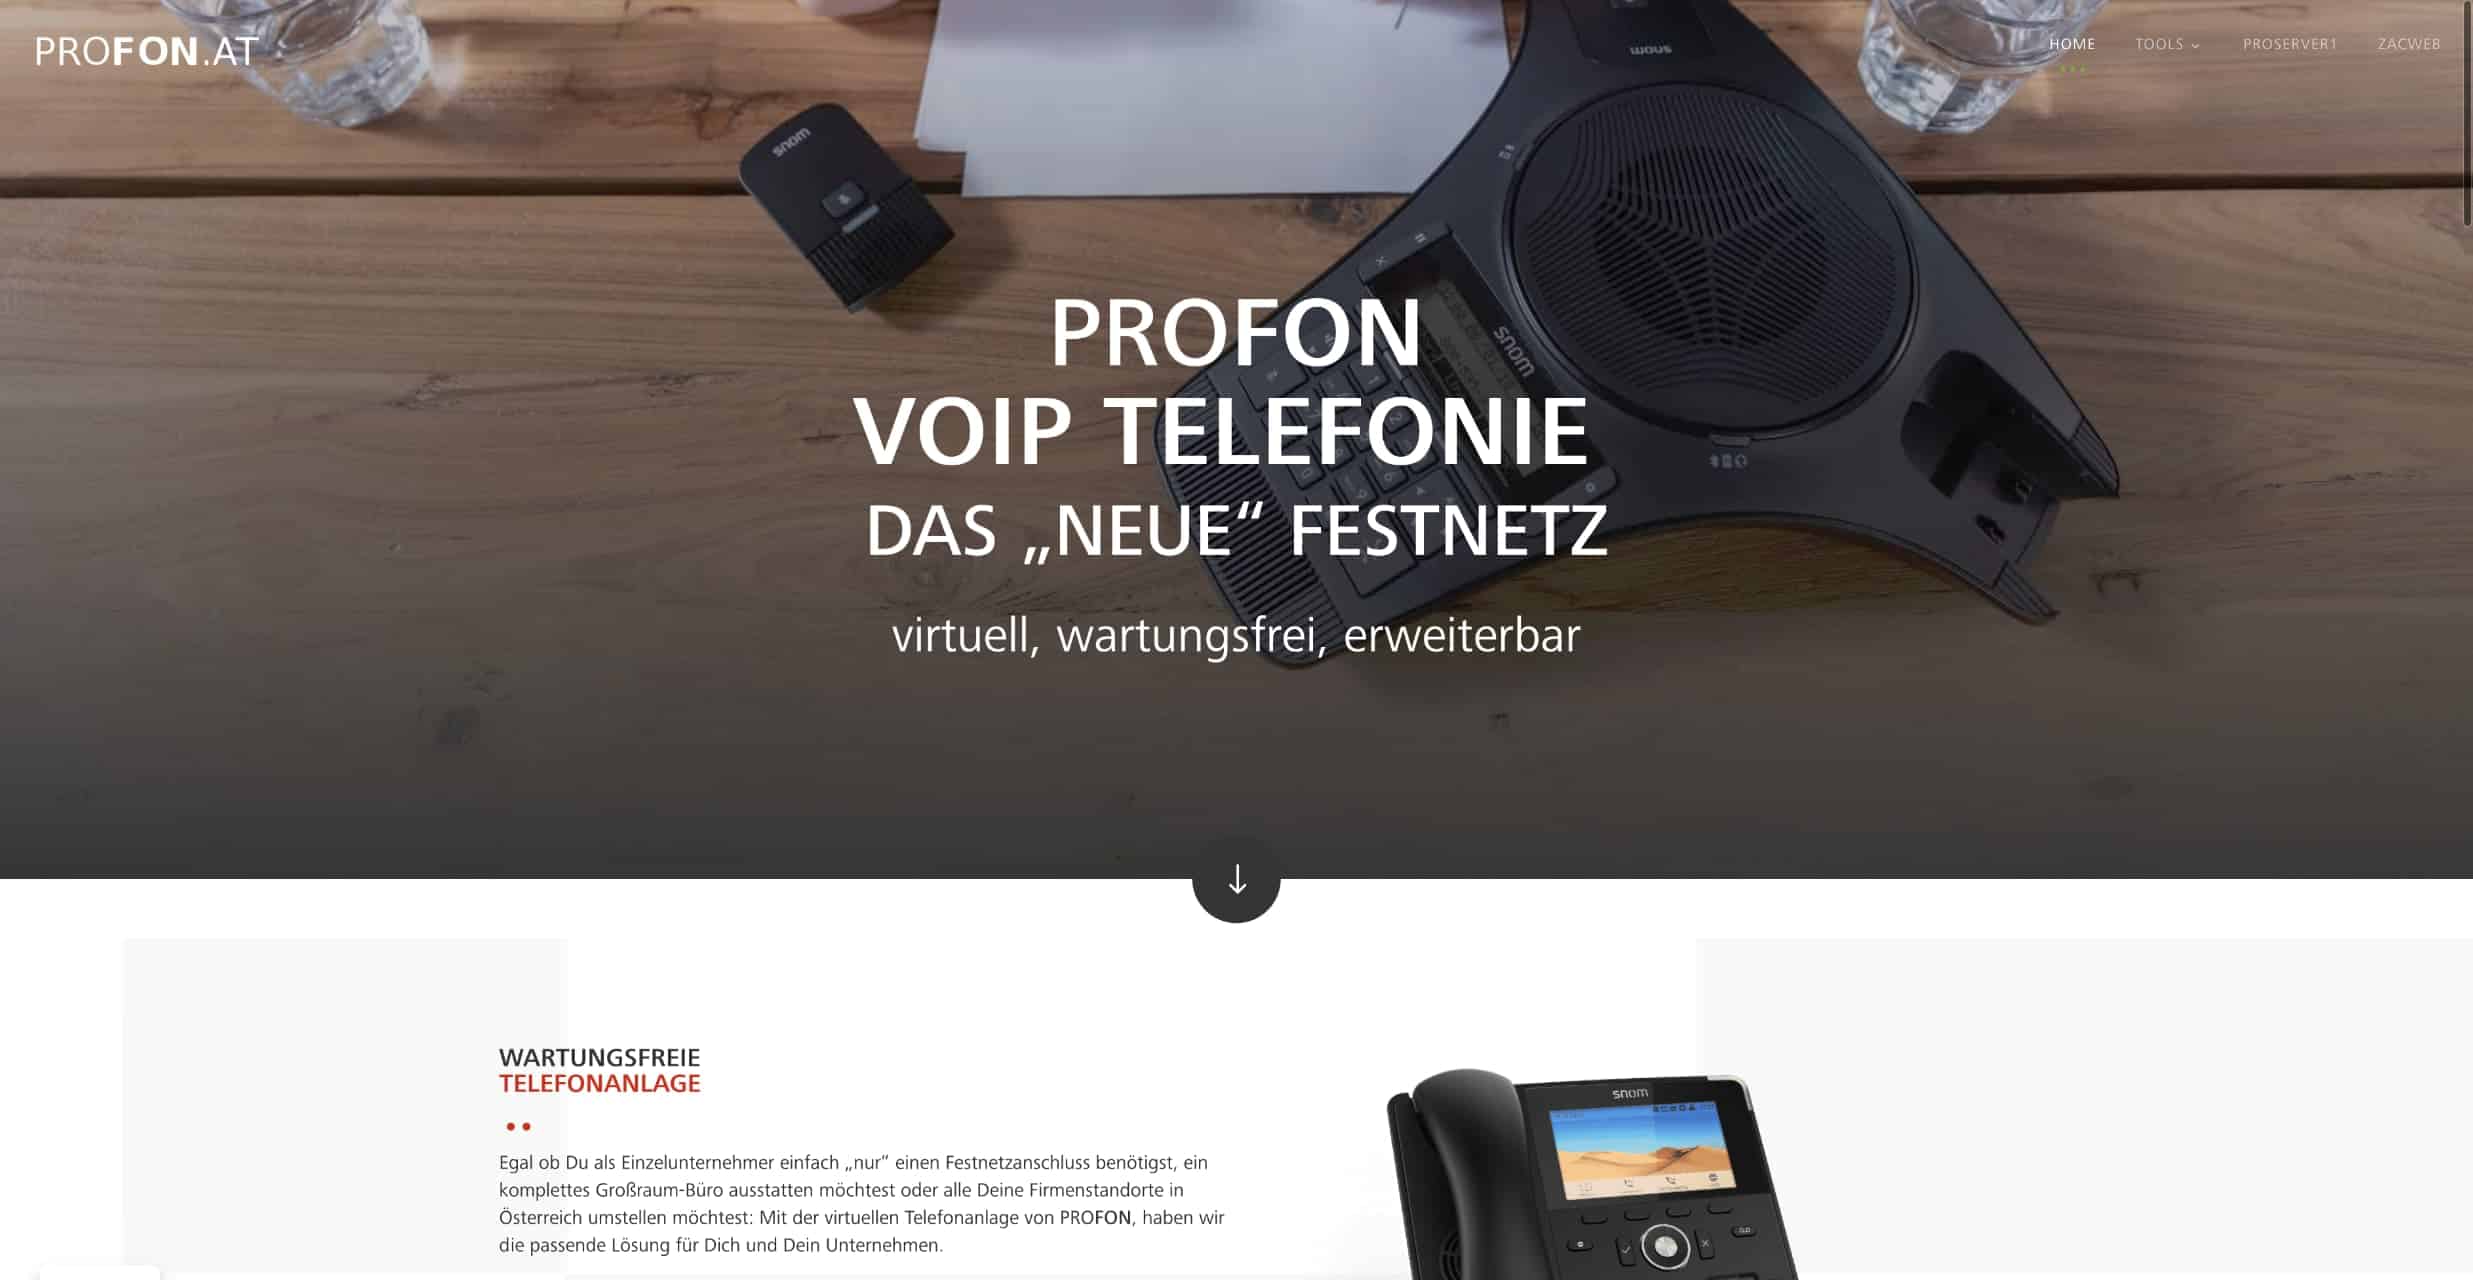 PROFON VOIP TELEFONIE - Das _neue_ Festnetz - profon.at